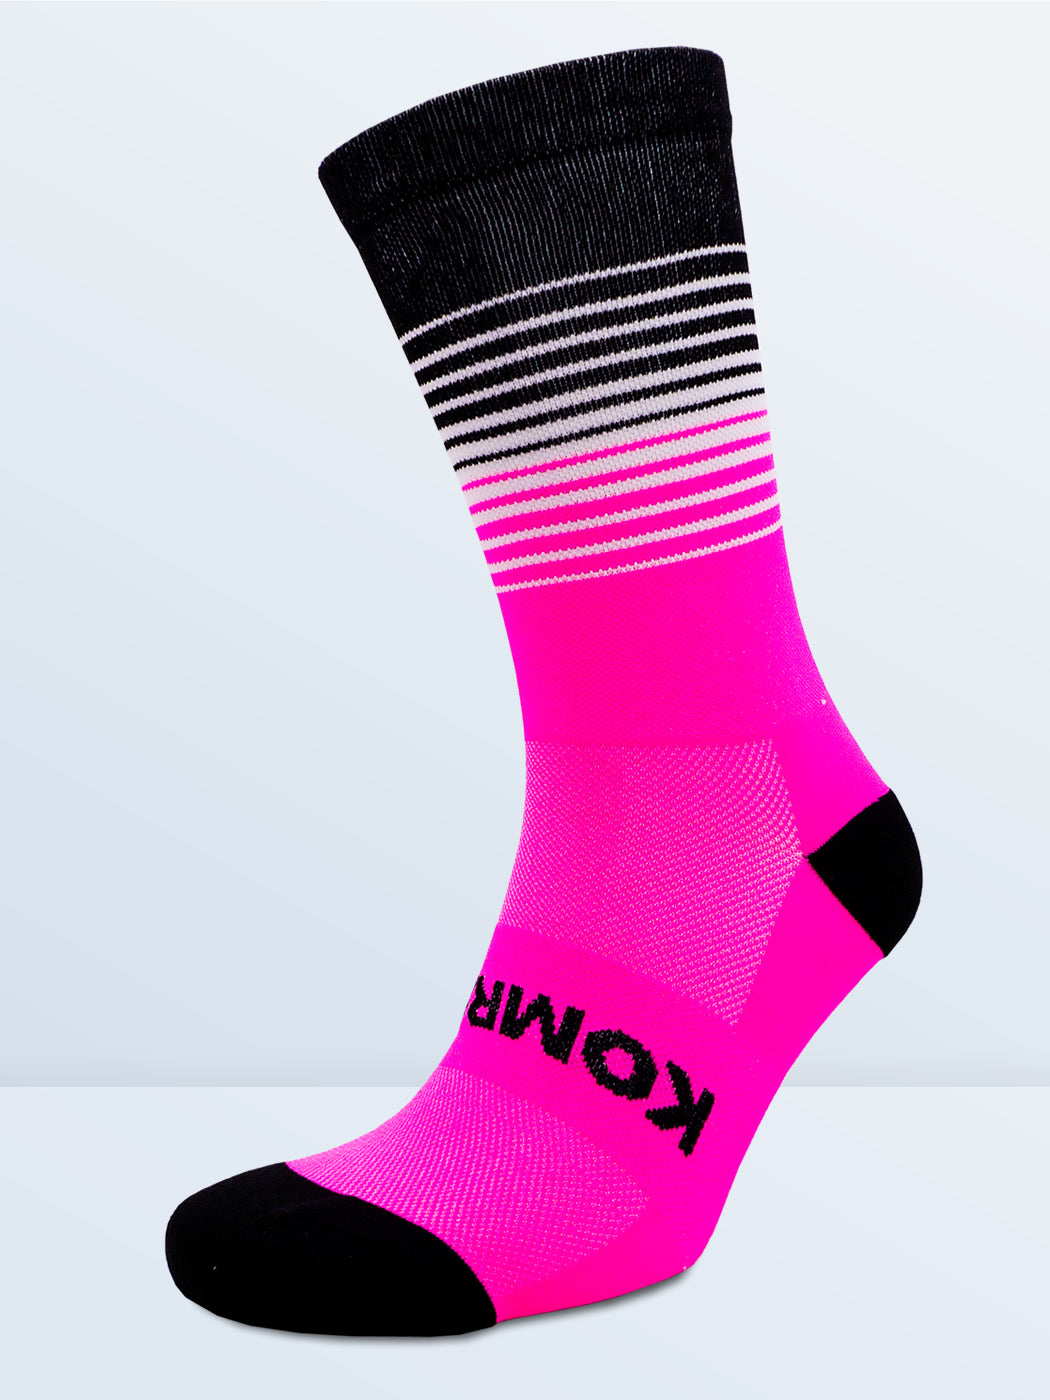 Swagger Socks - Fluro Pink & Black